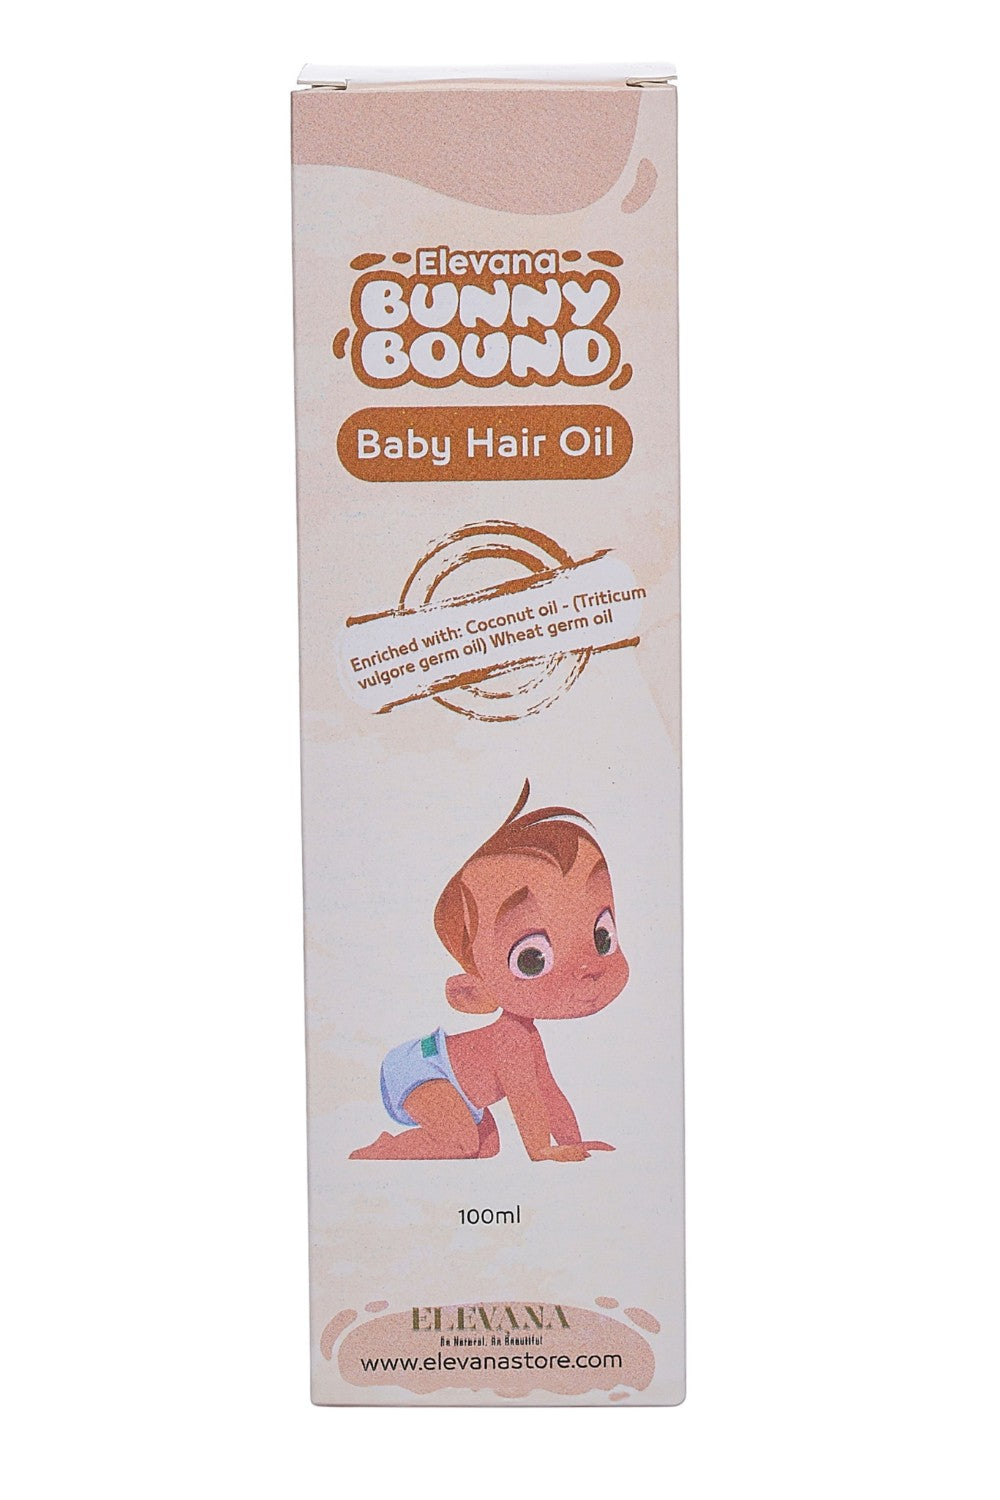 Shop Elevana Bunny Bound Baby Hair Oil on ZYNAH